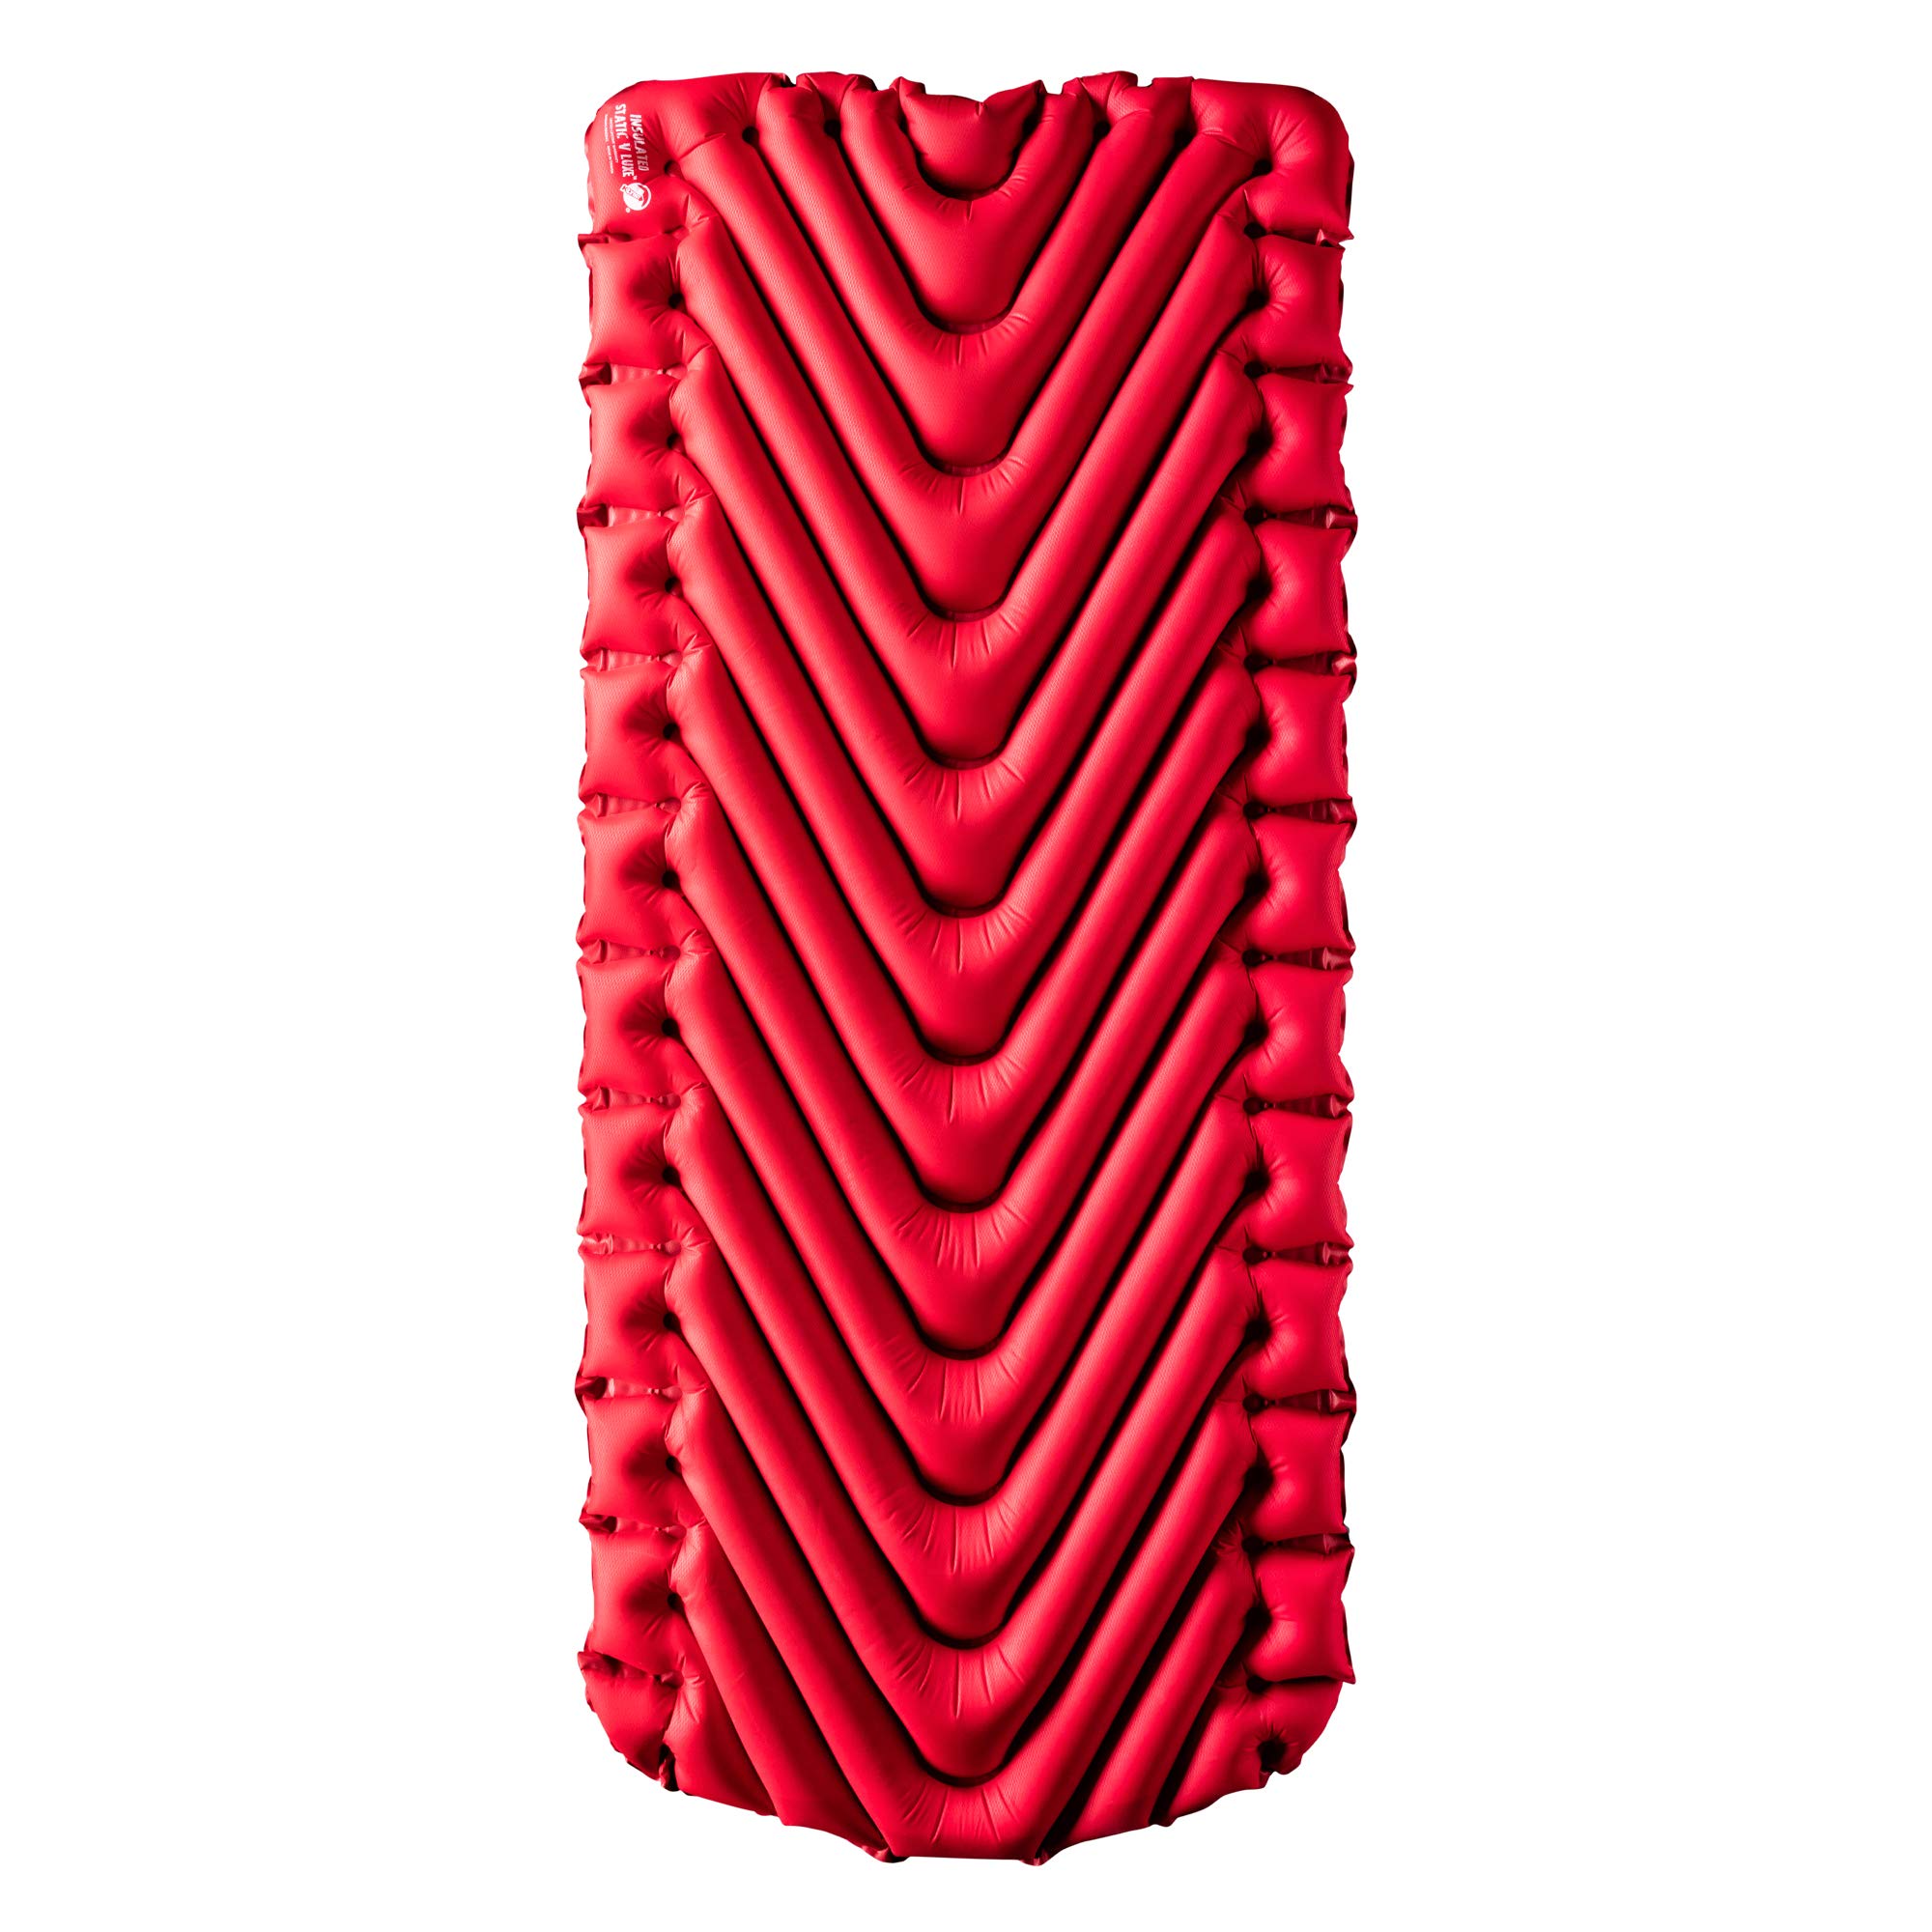 Купить надувной коврик. Klymit Insulated static v Luxe Pad Red. Надувной коврик Insulated static v Luxe Red, красный 06lird01d. Klymit Insulated static v Luxe Red. Надувной коврик Klymit.